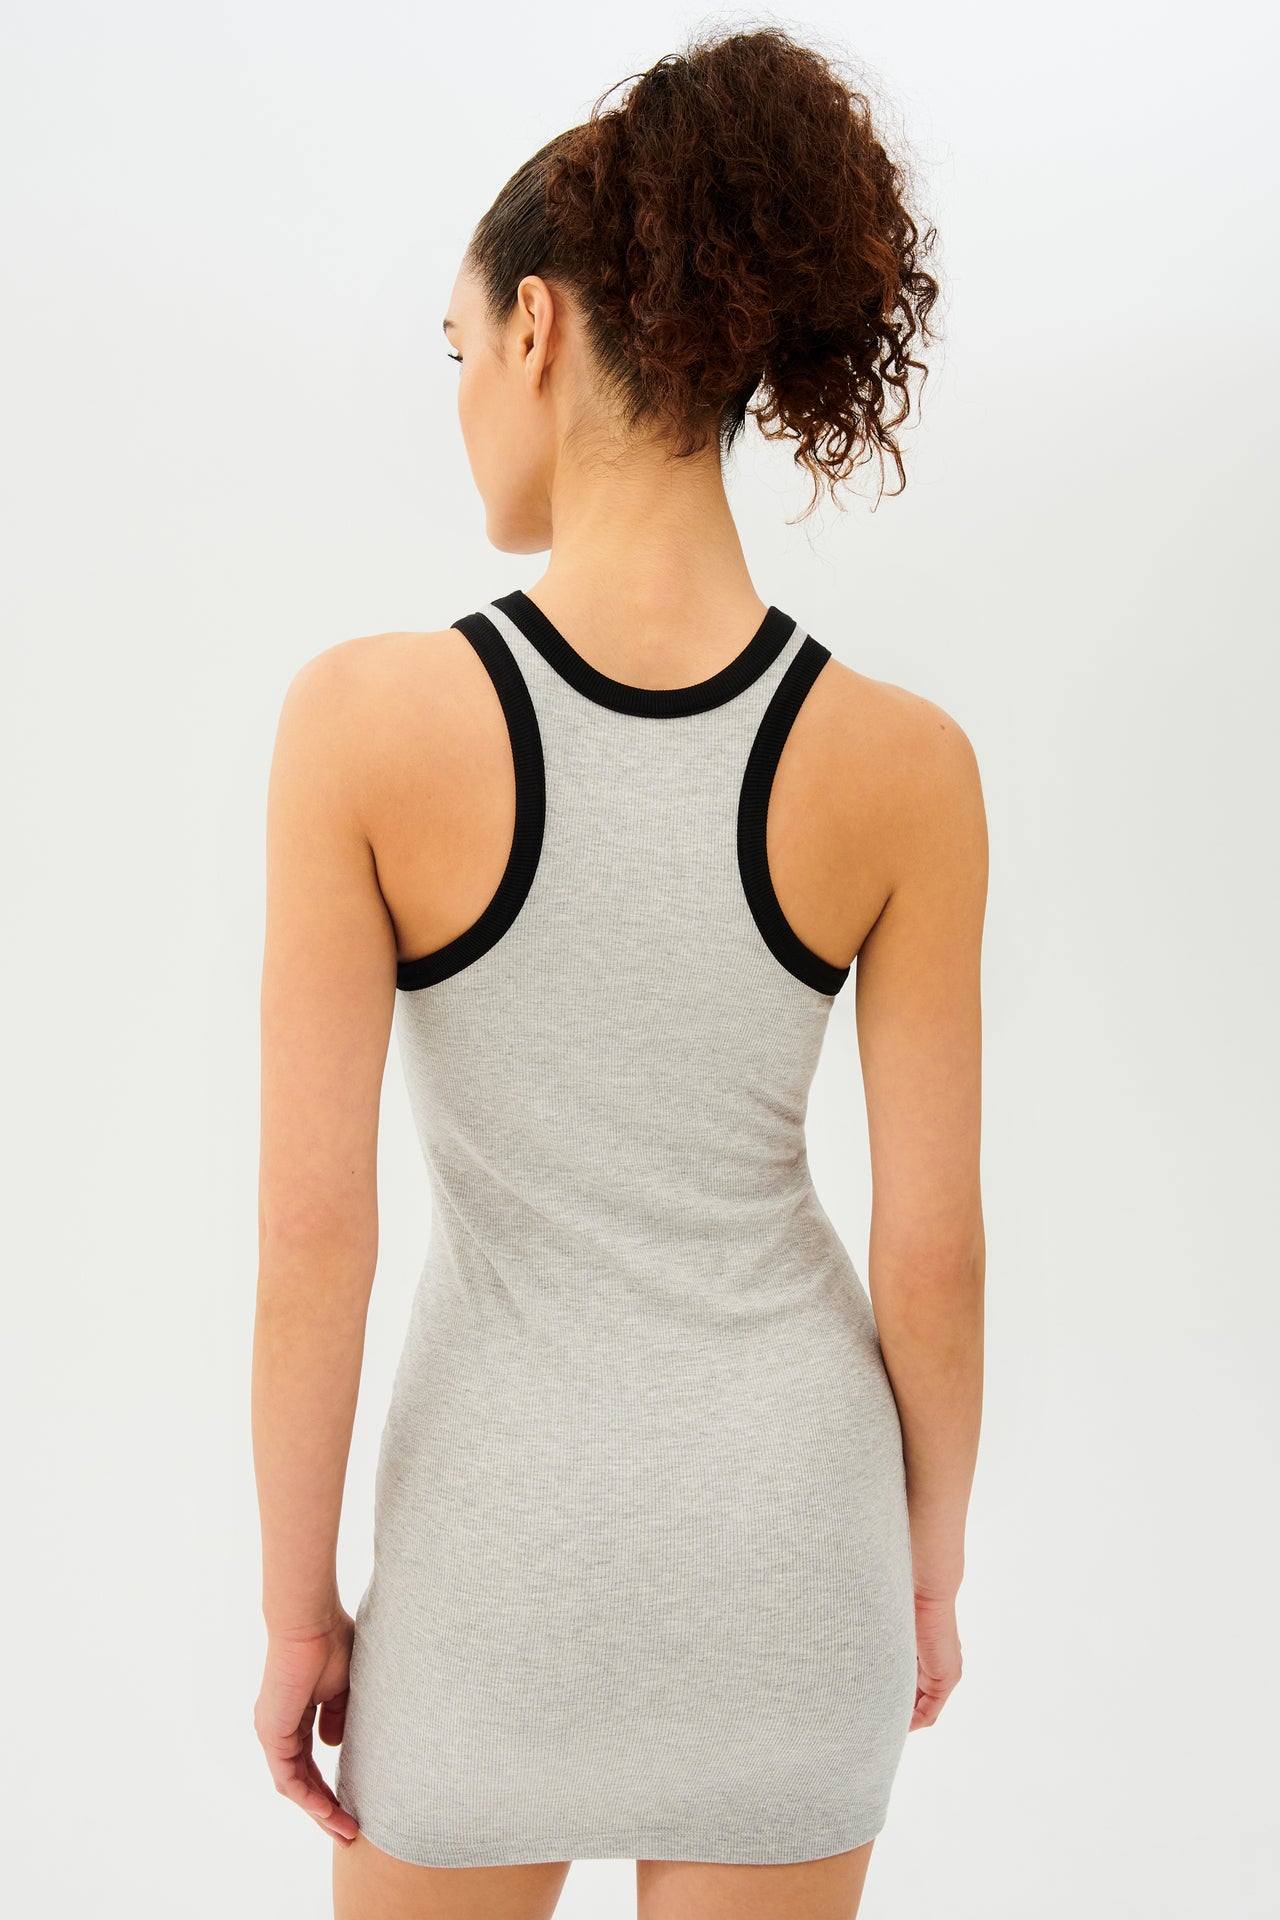 The back view of a woman in a SPLITS59 Kiki Rib Dress - Heather Grey/Black.